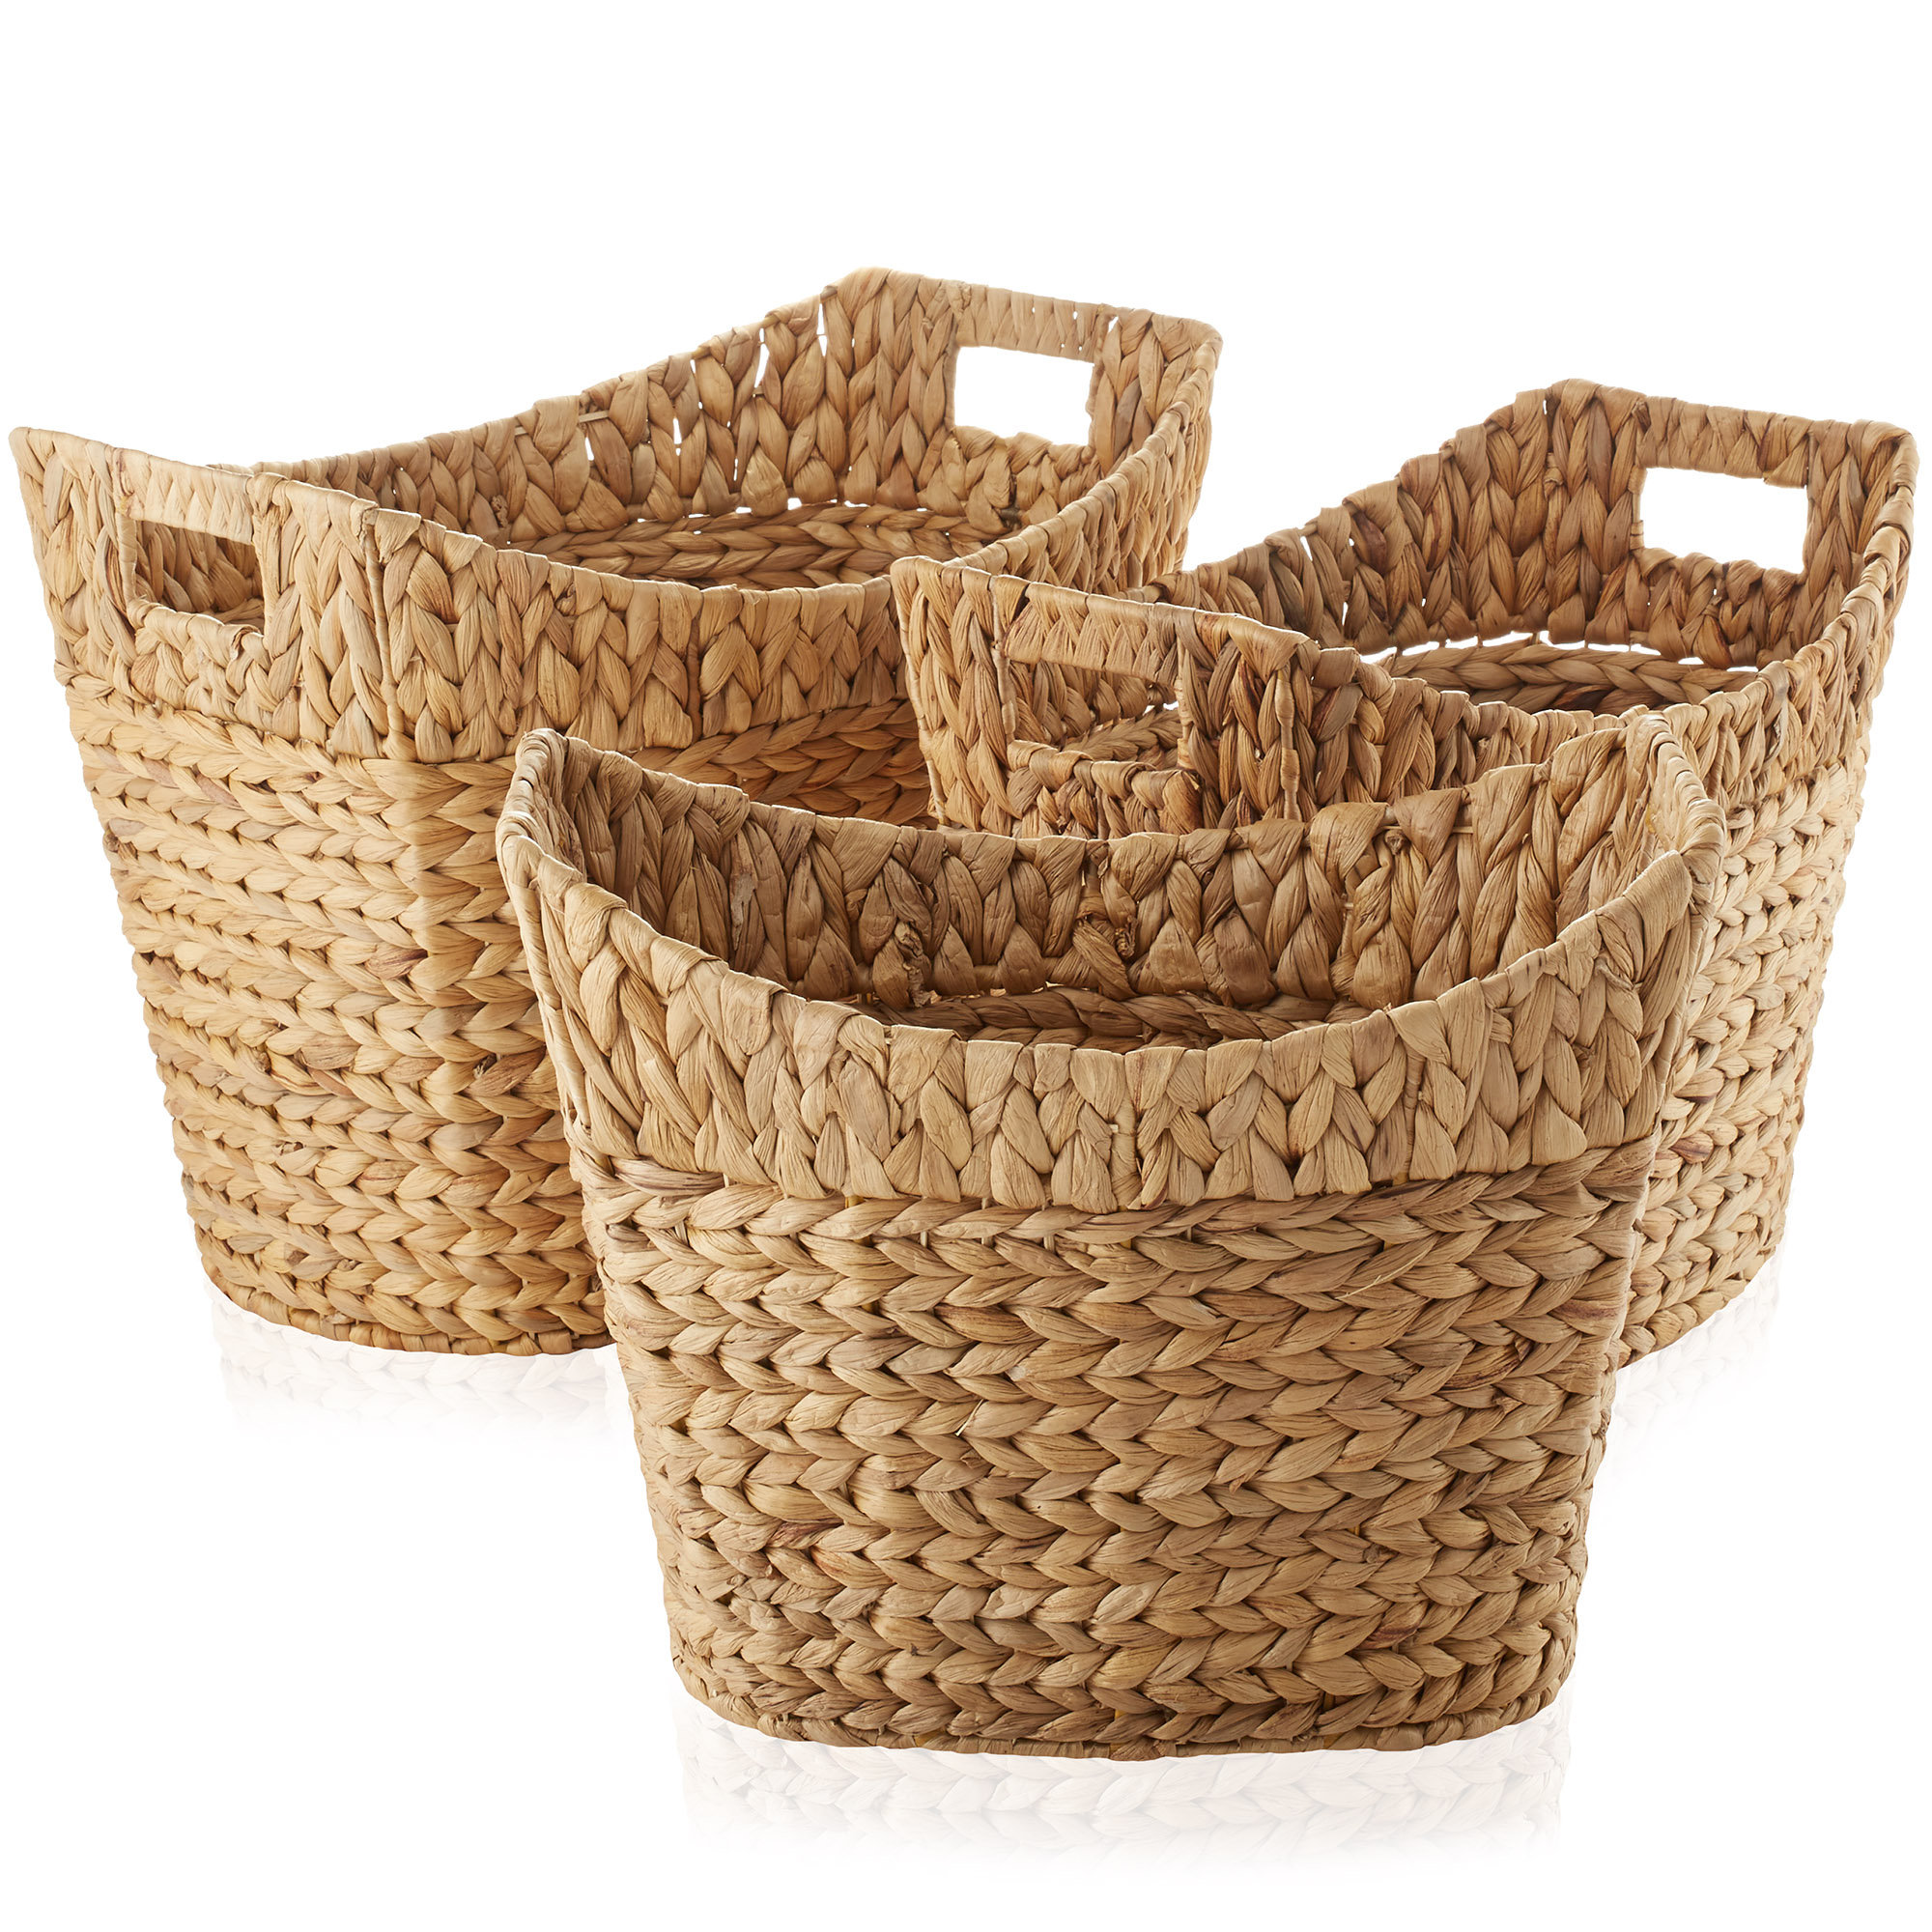 Casafield 12 X 12 Water Hyacinth Storage Baskets, Natural - Set